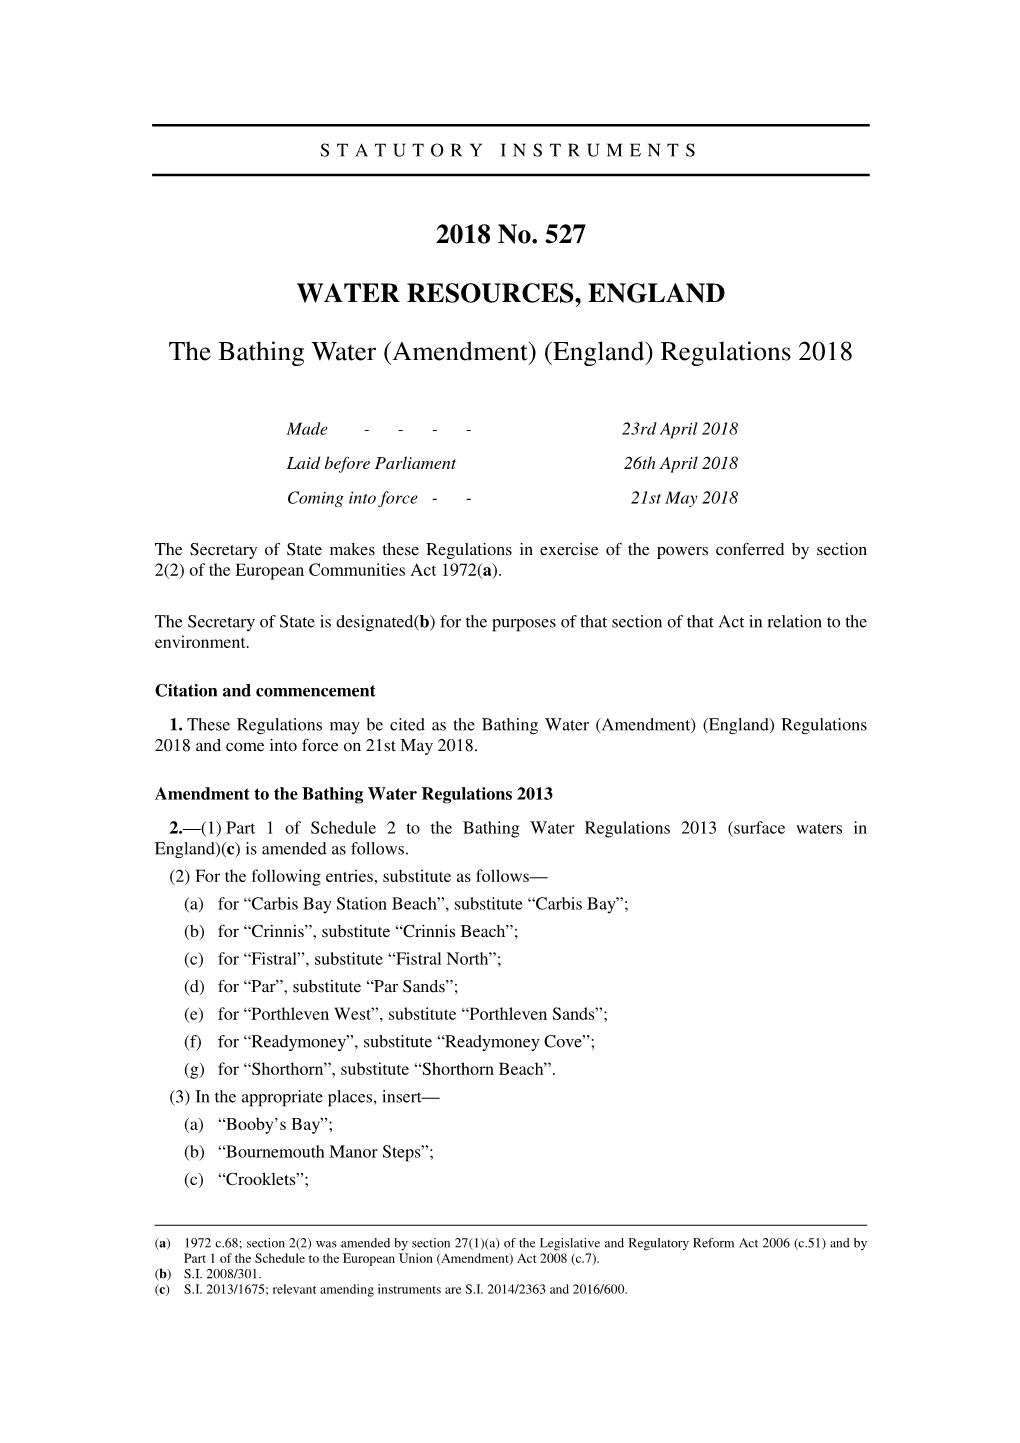 The Bathing Water (Amendment) (England) Regulations 2018